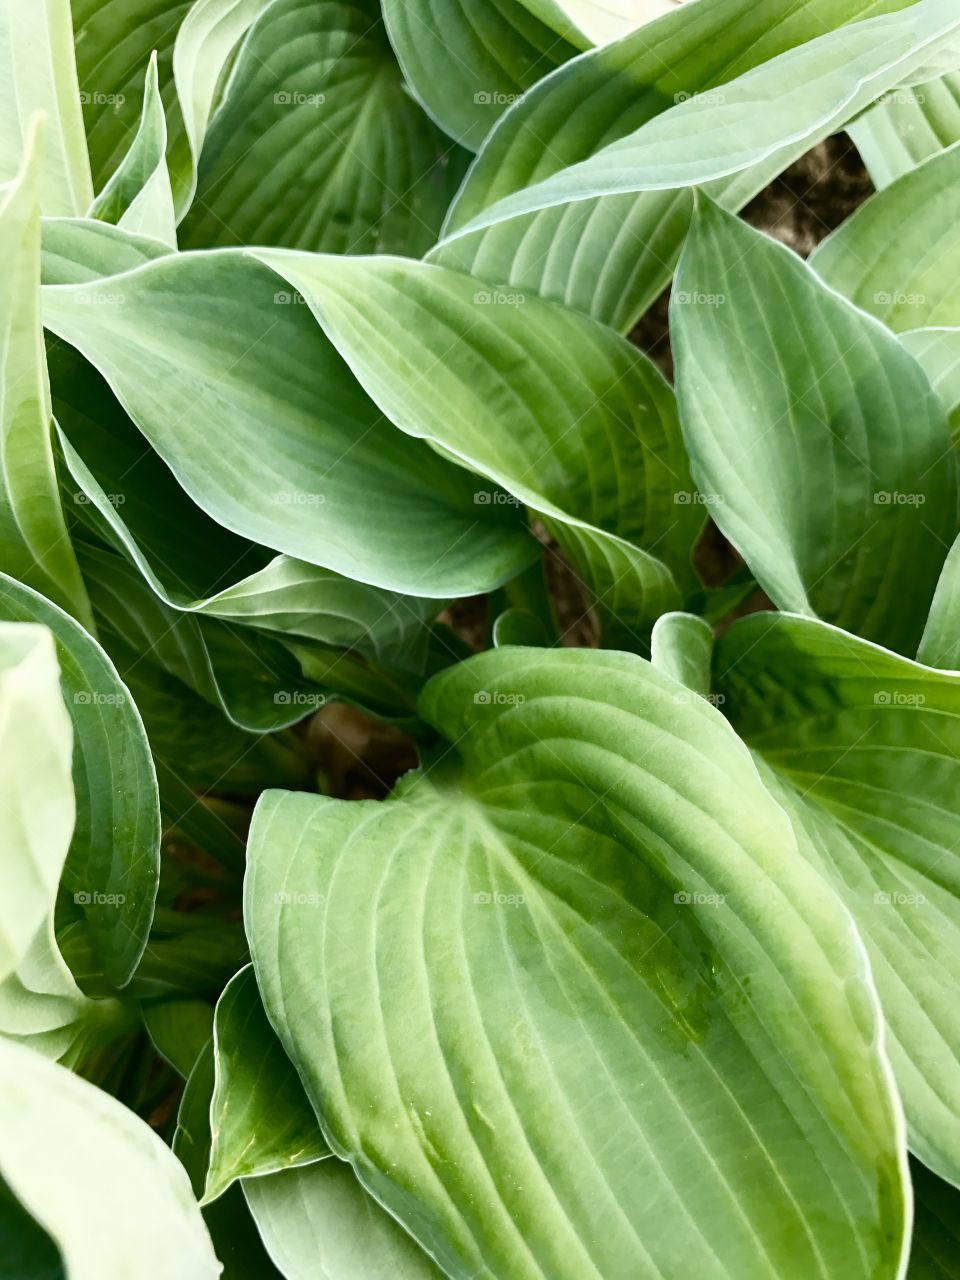 green leaves pattern 